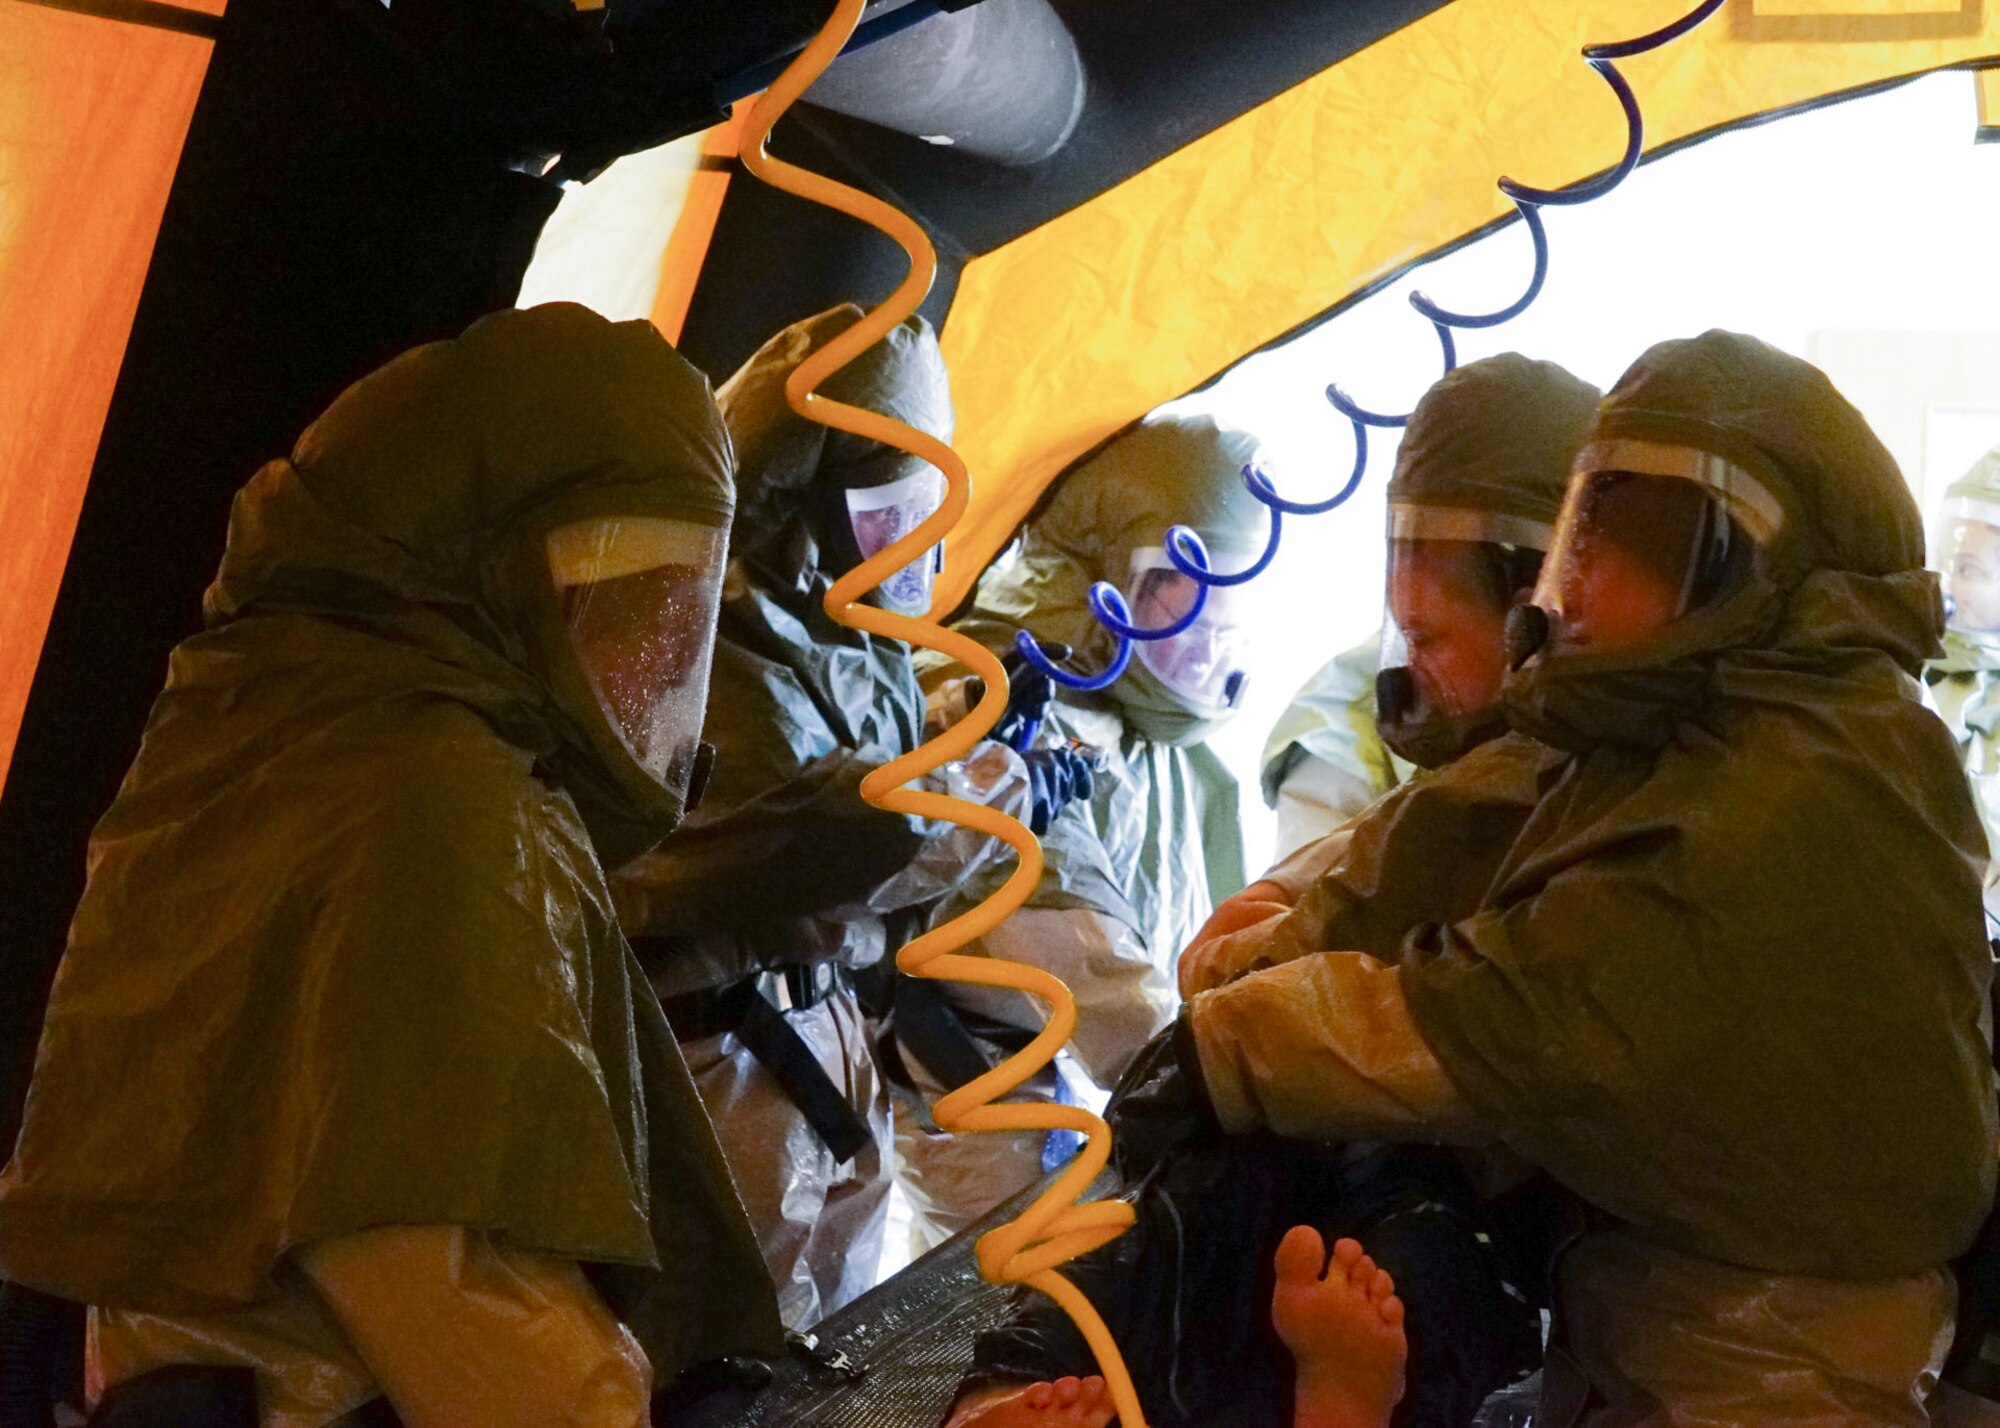 A group of Airmen decontaminate a volunteer patient.